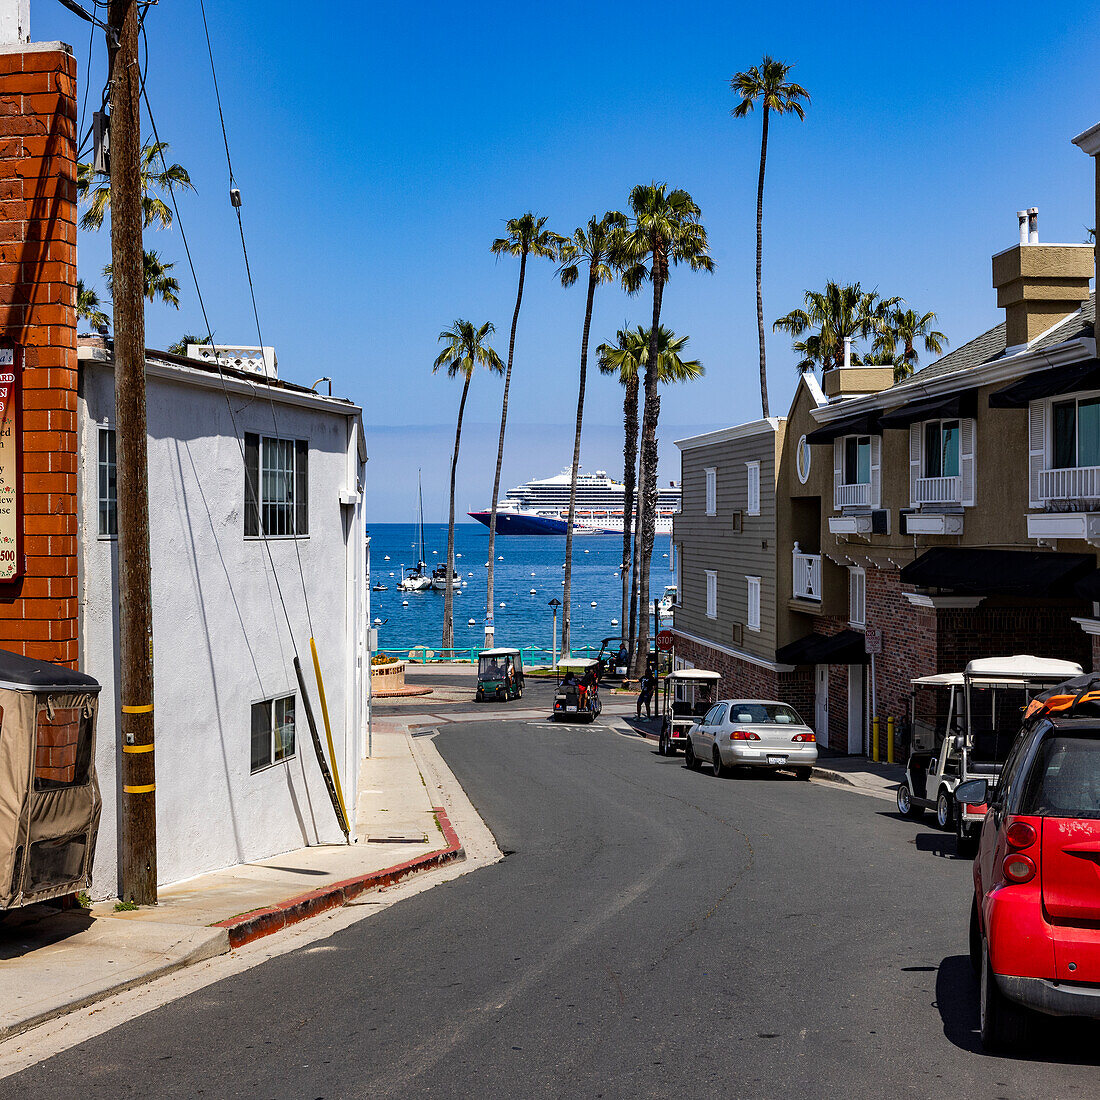 USA, California, Catalina Island, City of Avalon, View down street to Avalon Harbor where cruise ship is docked\n